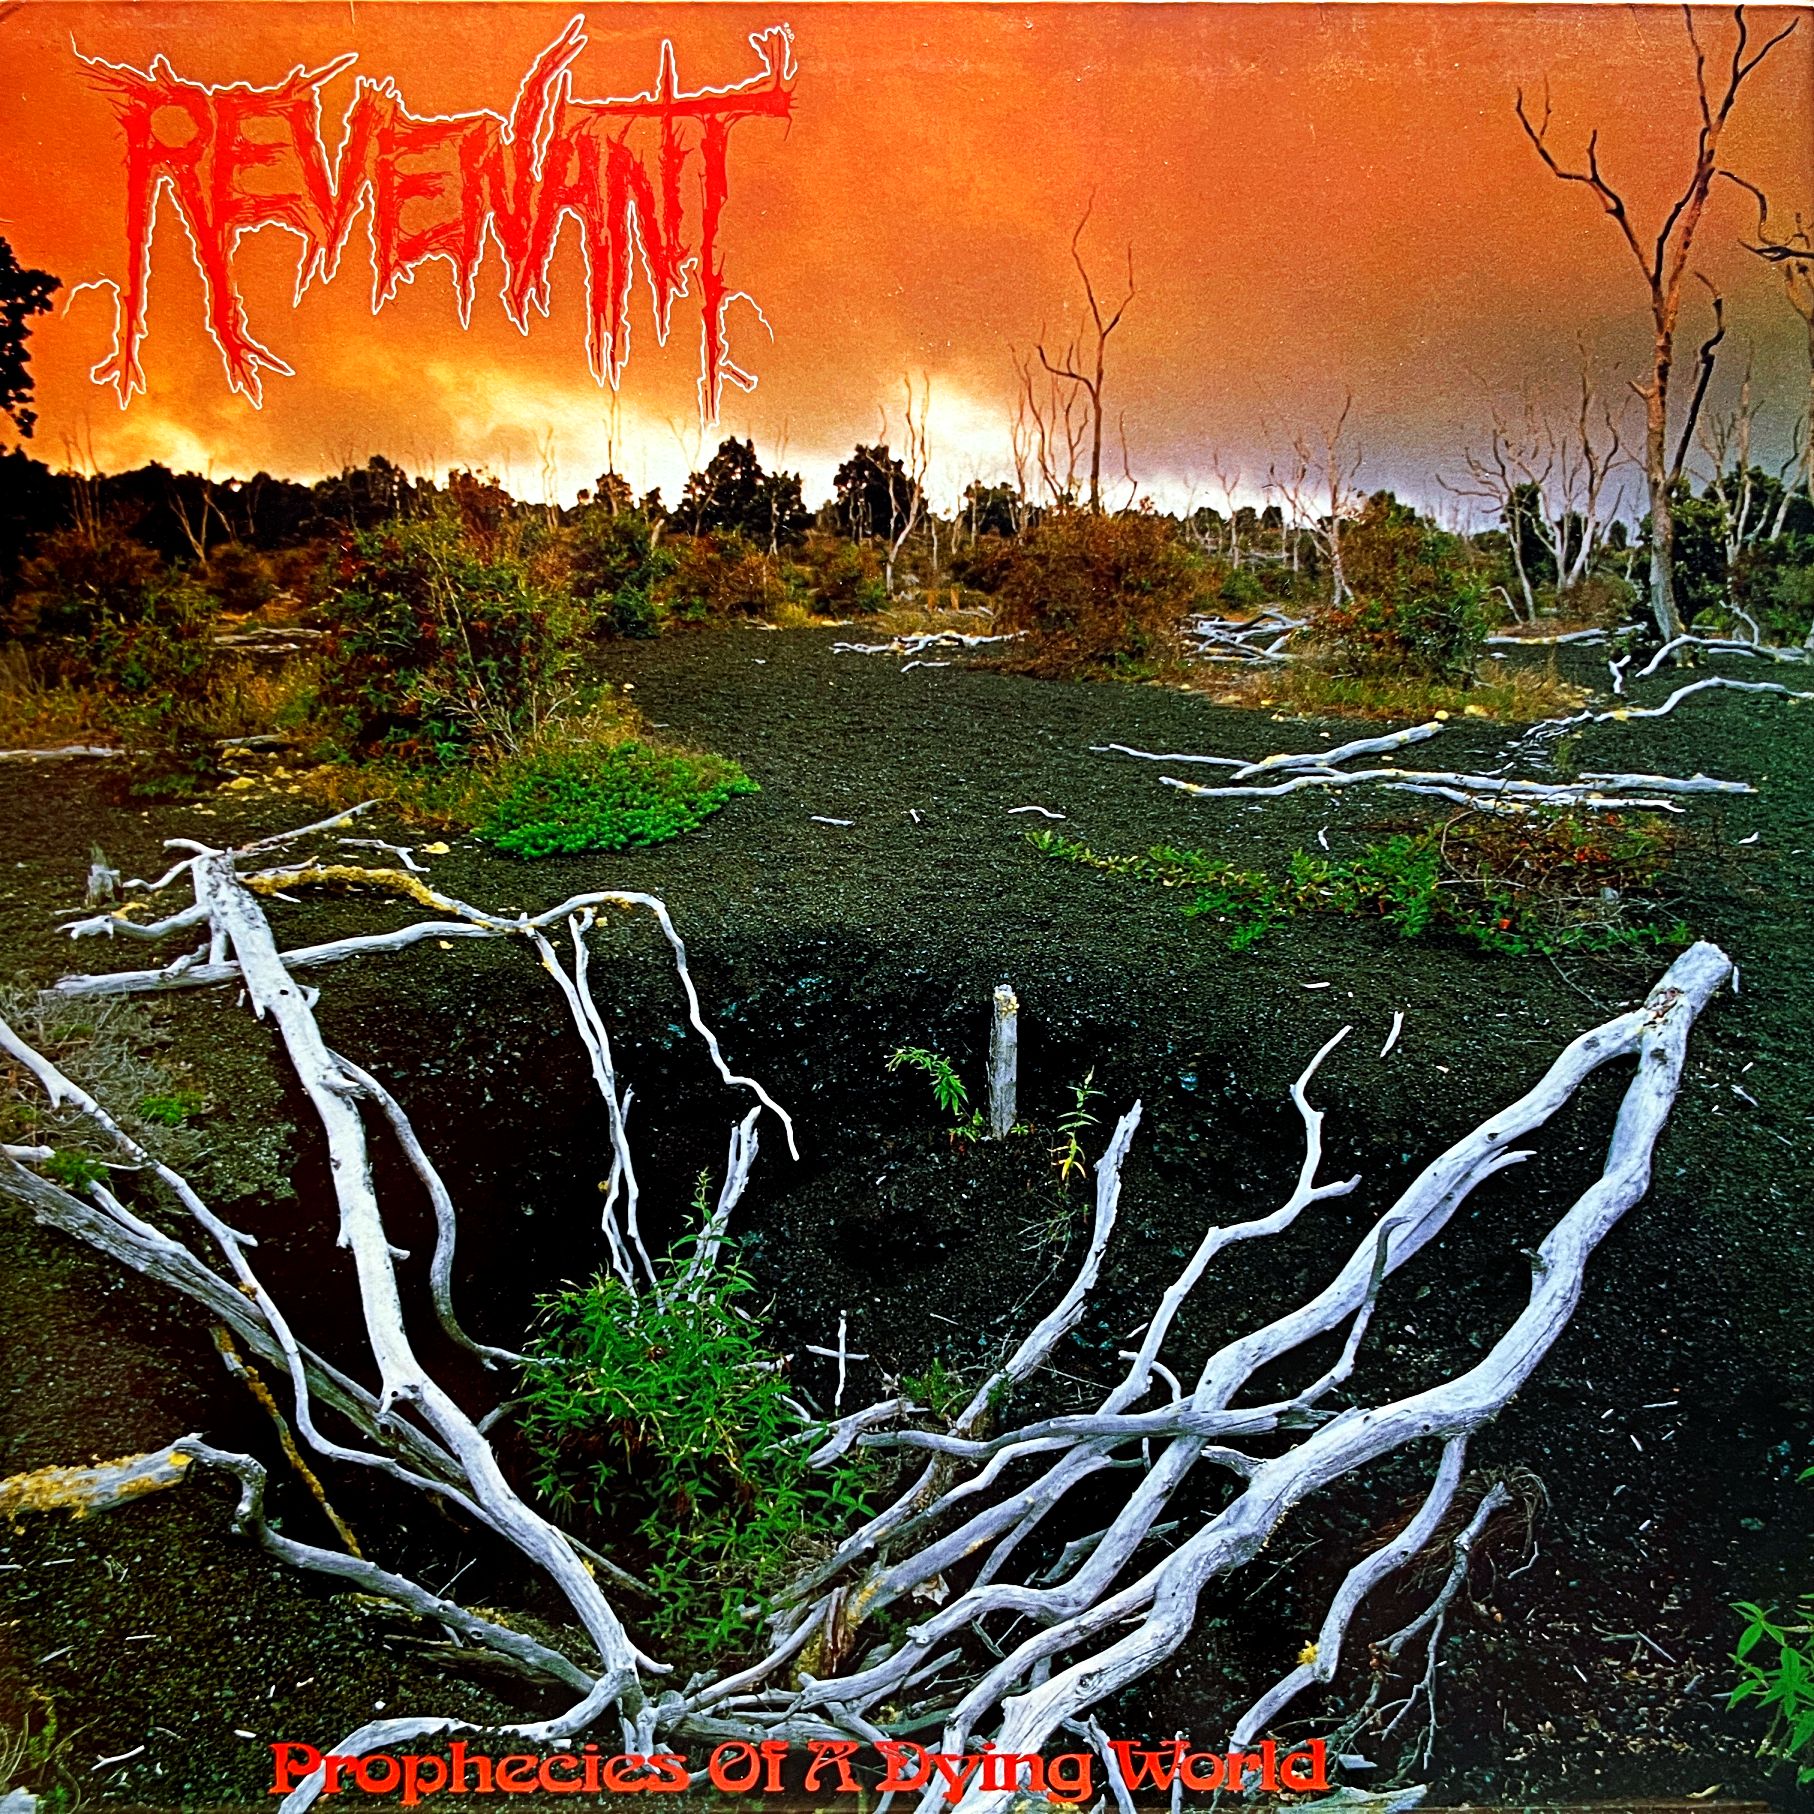 LP Revenant – Prophecies Of A Dying World